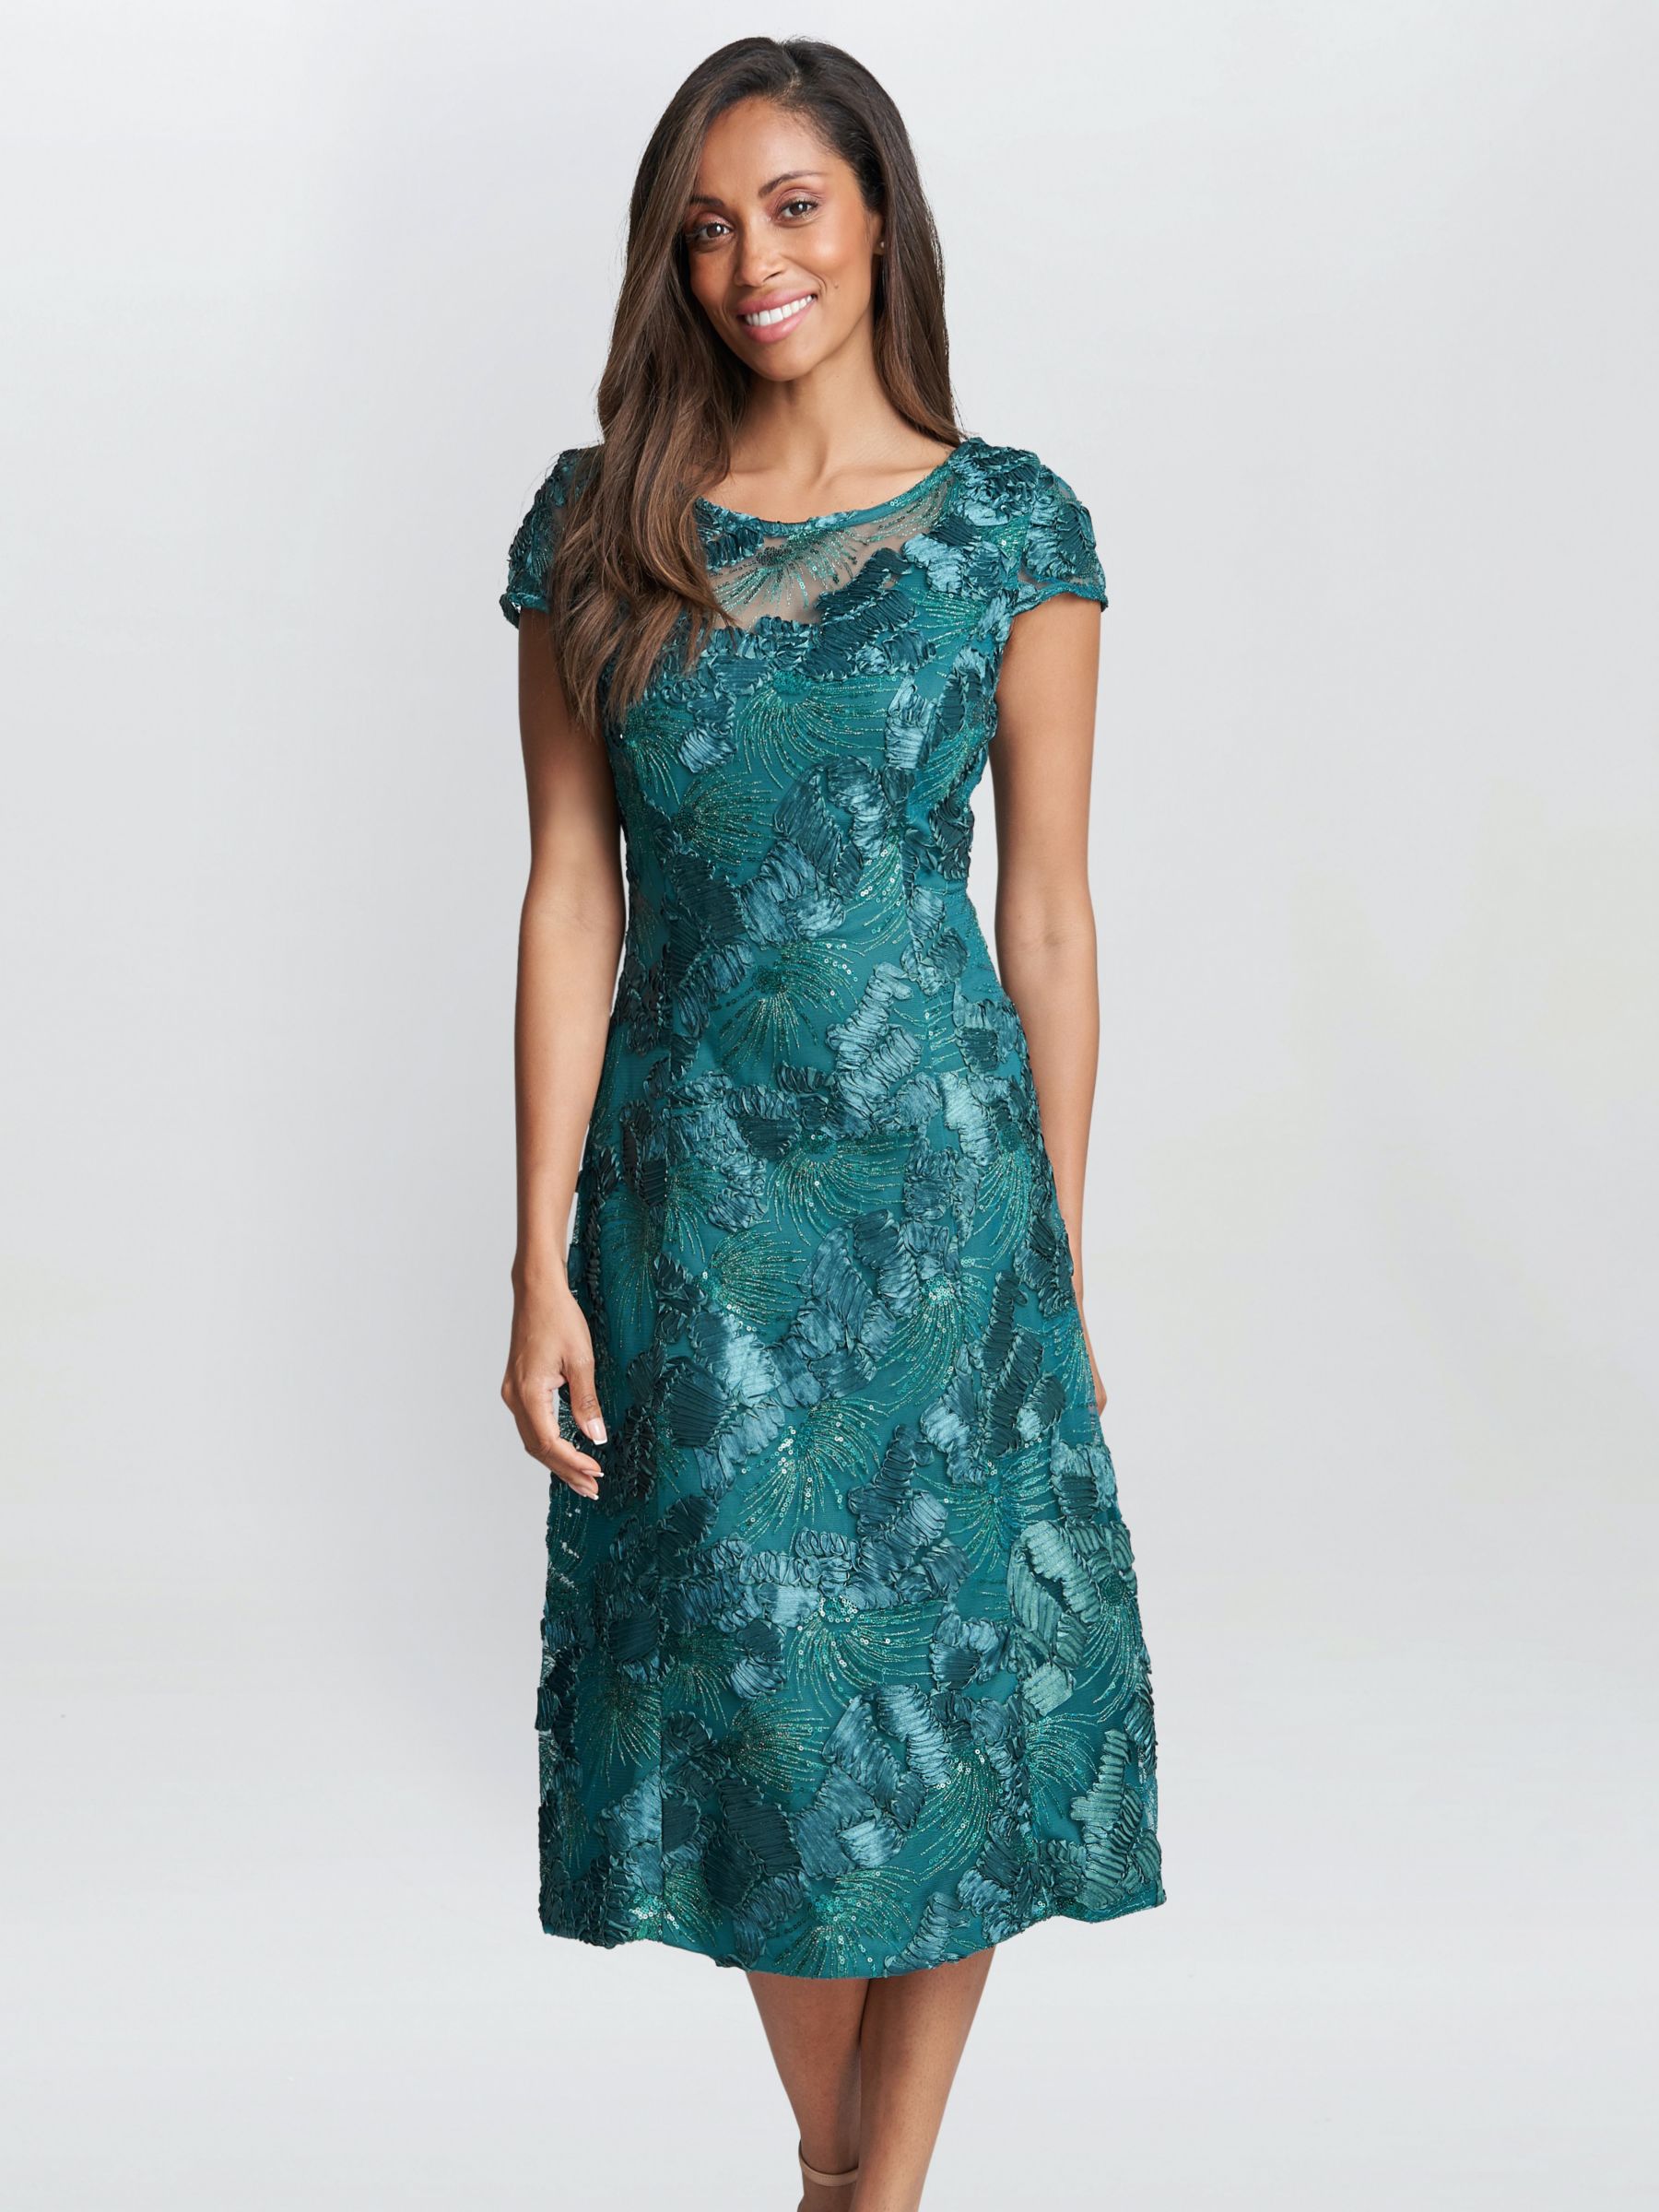 Gina Bacconi Abella Illusion Jewel Floral Dress, Emerald at John Lewis ...